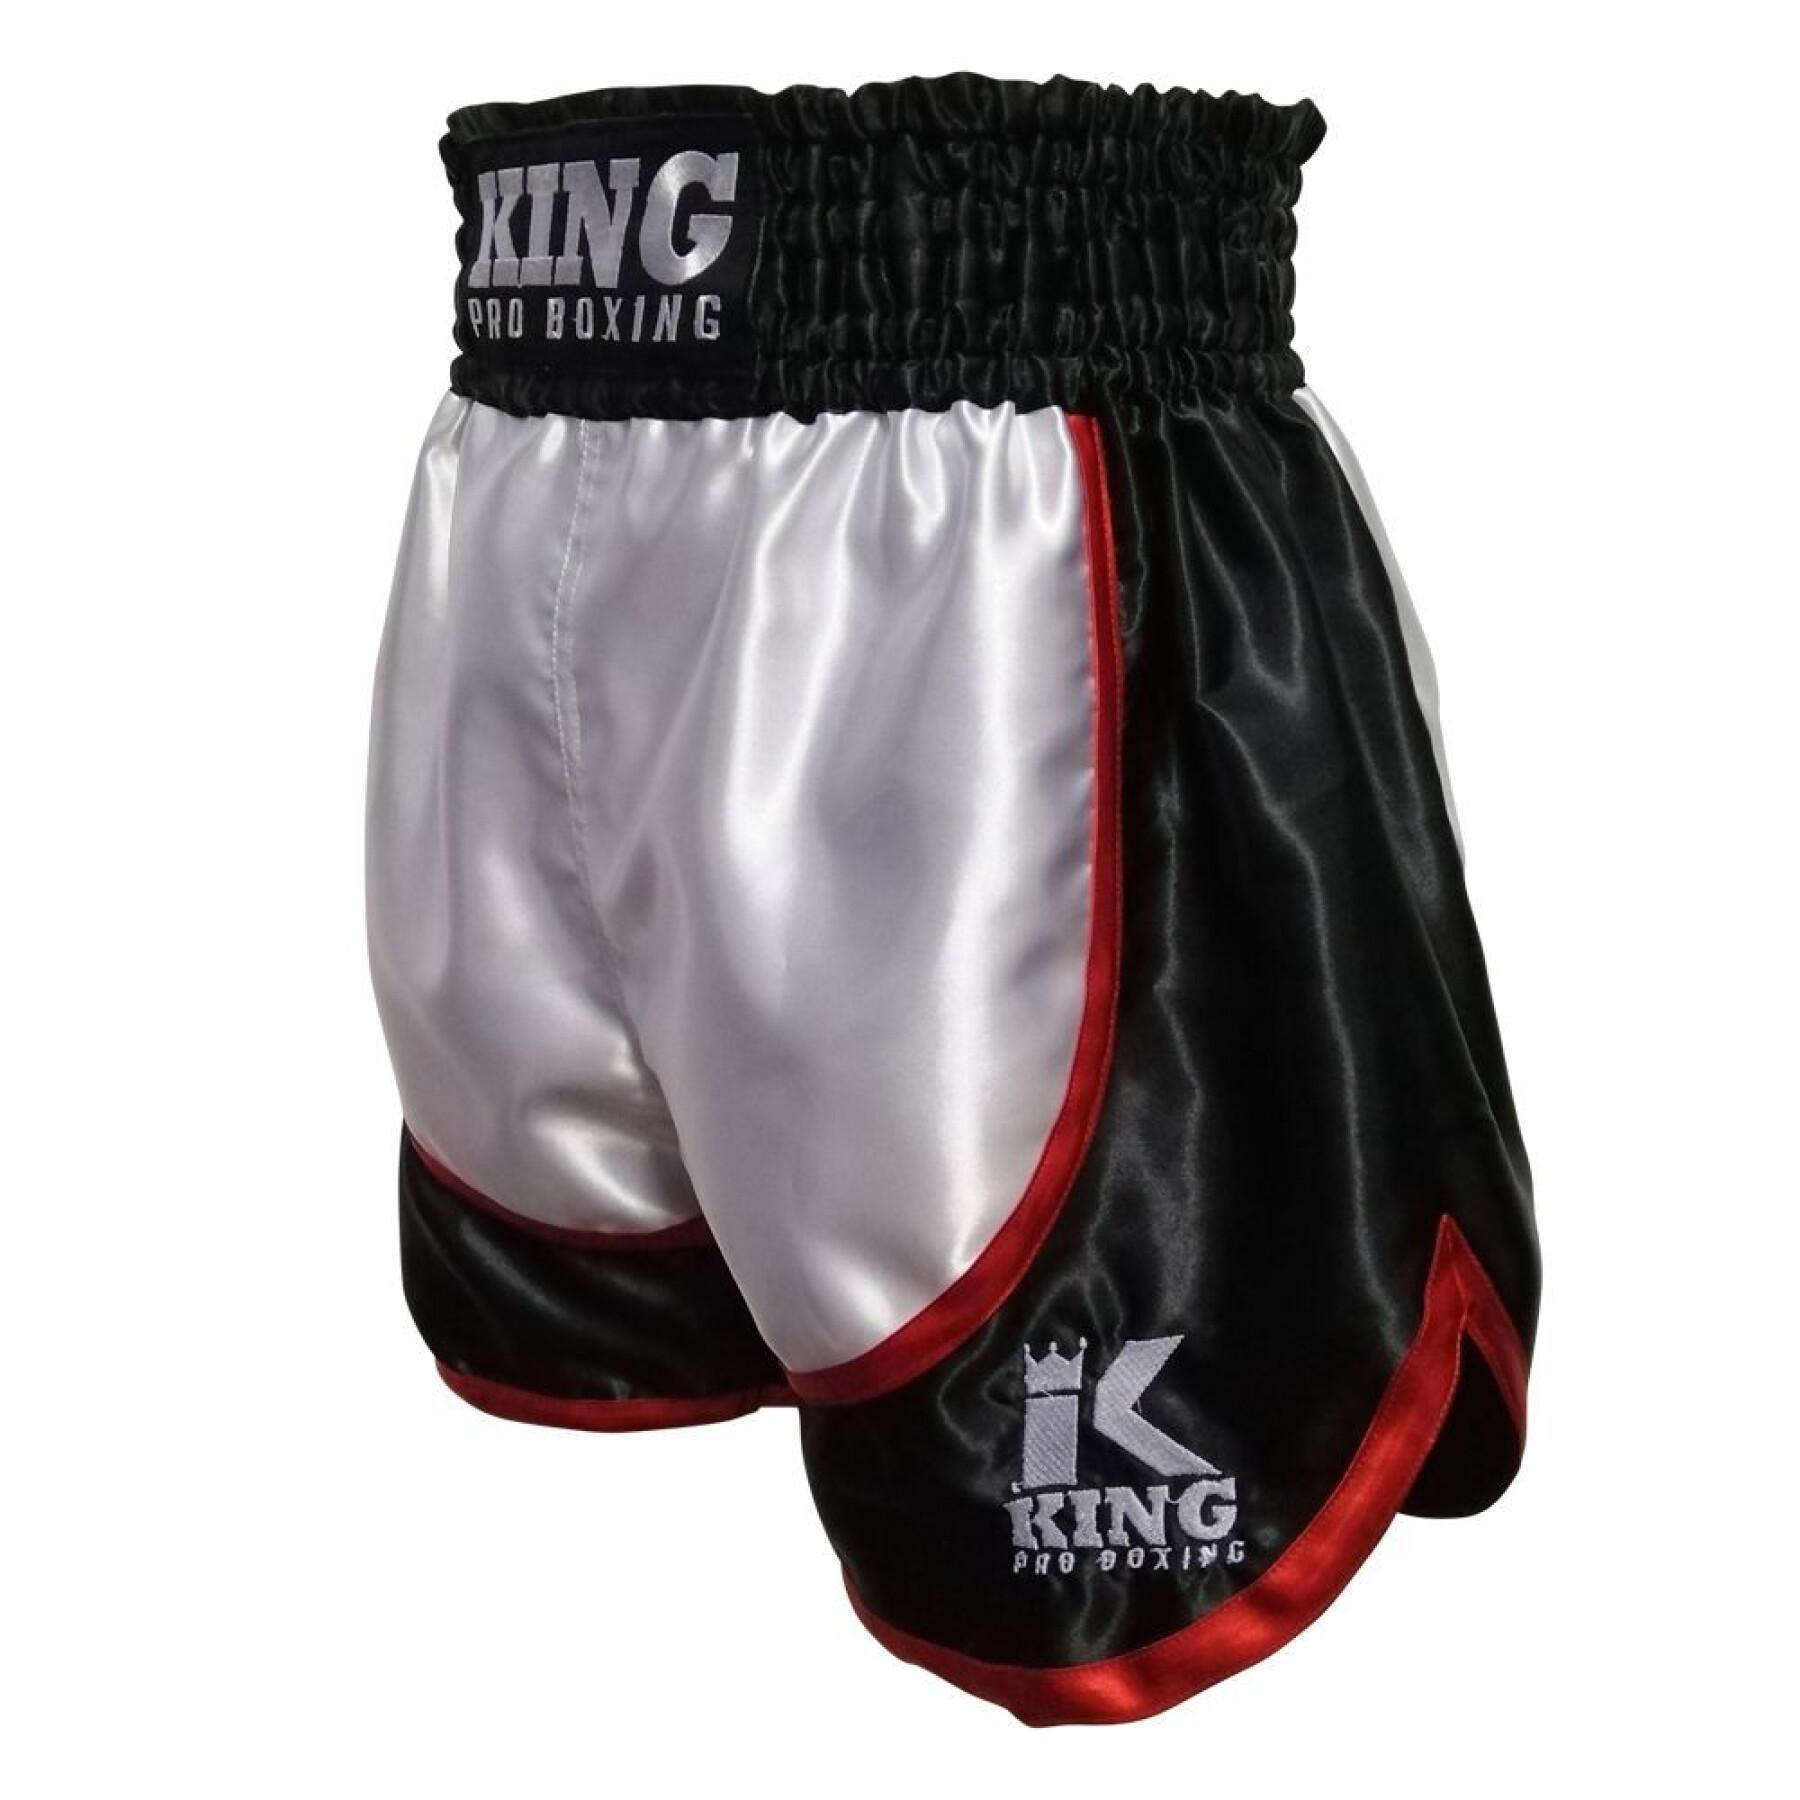 Calções de boxe tailandeses logótipo grande King Pro Boxing